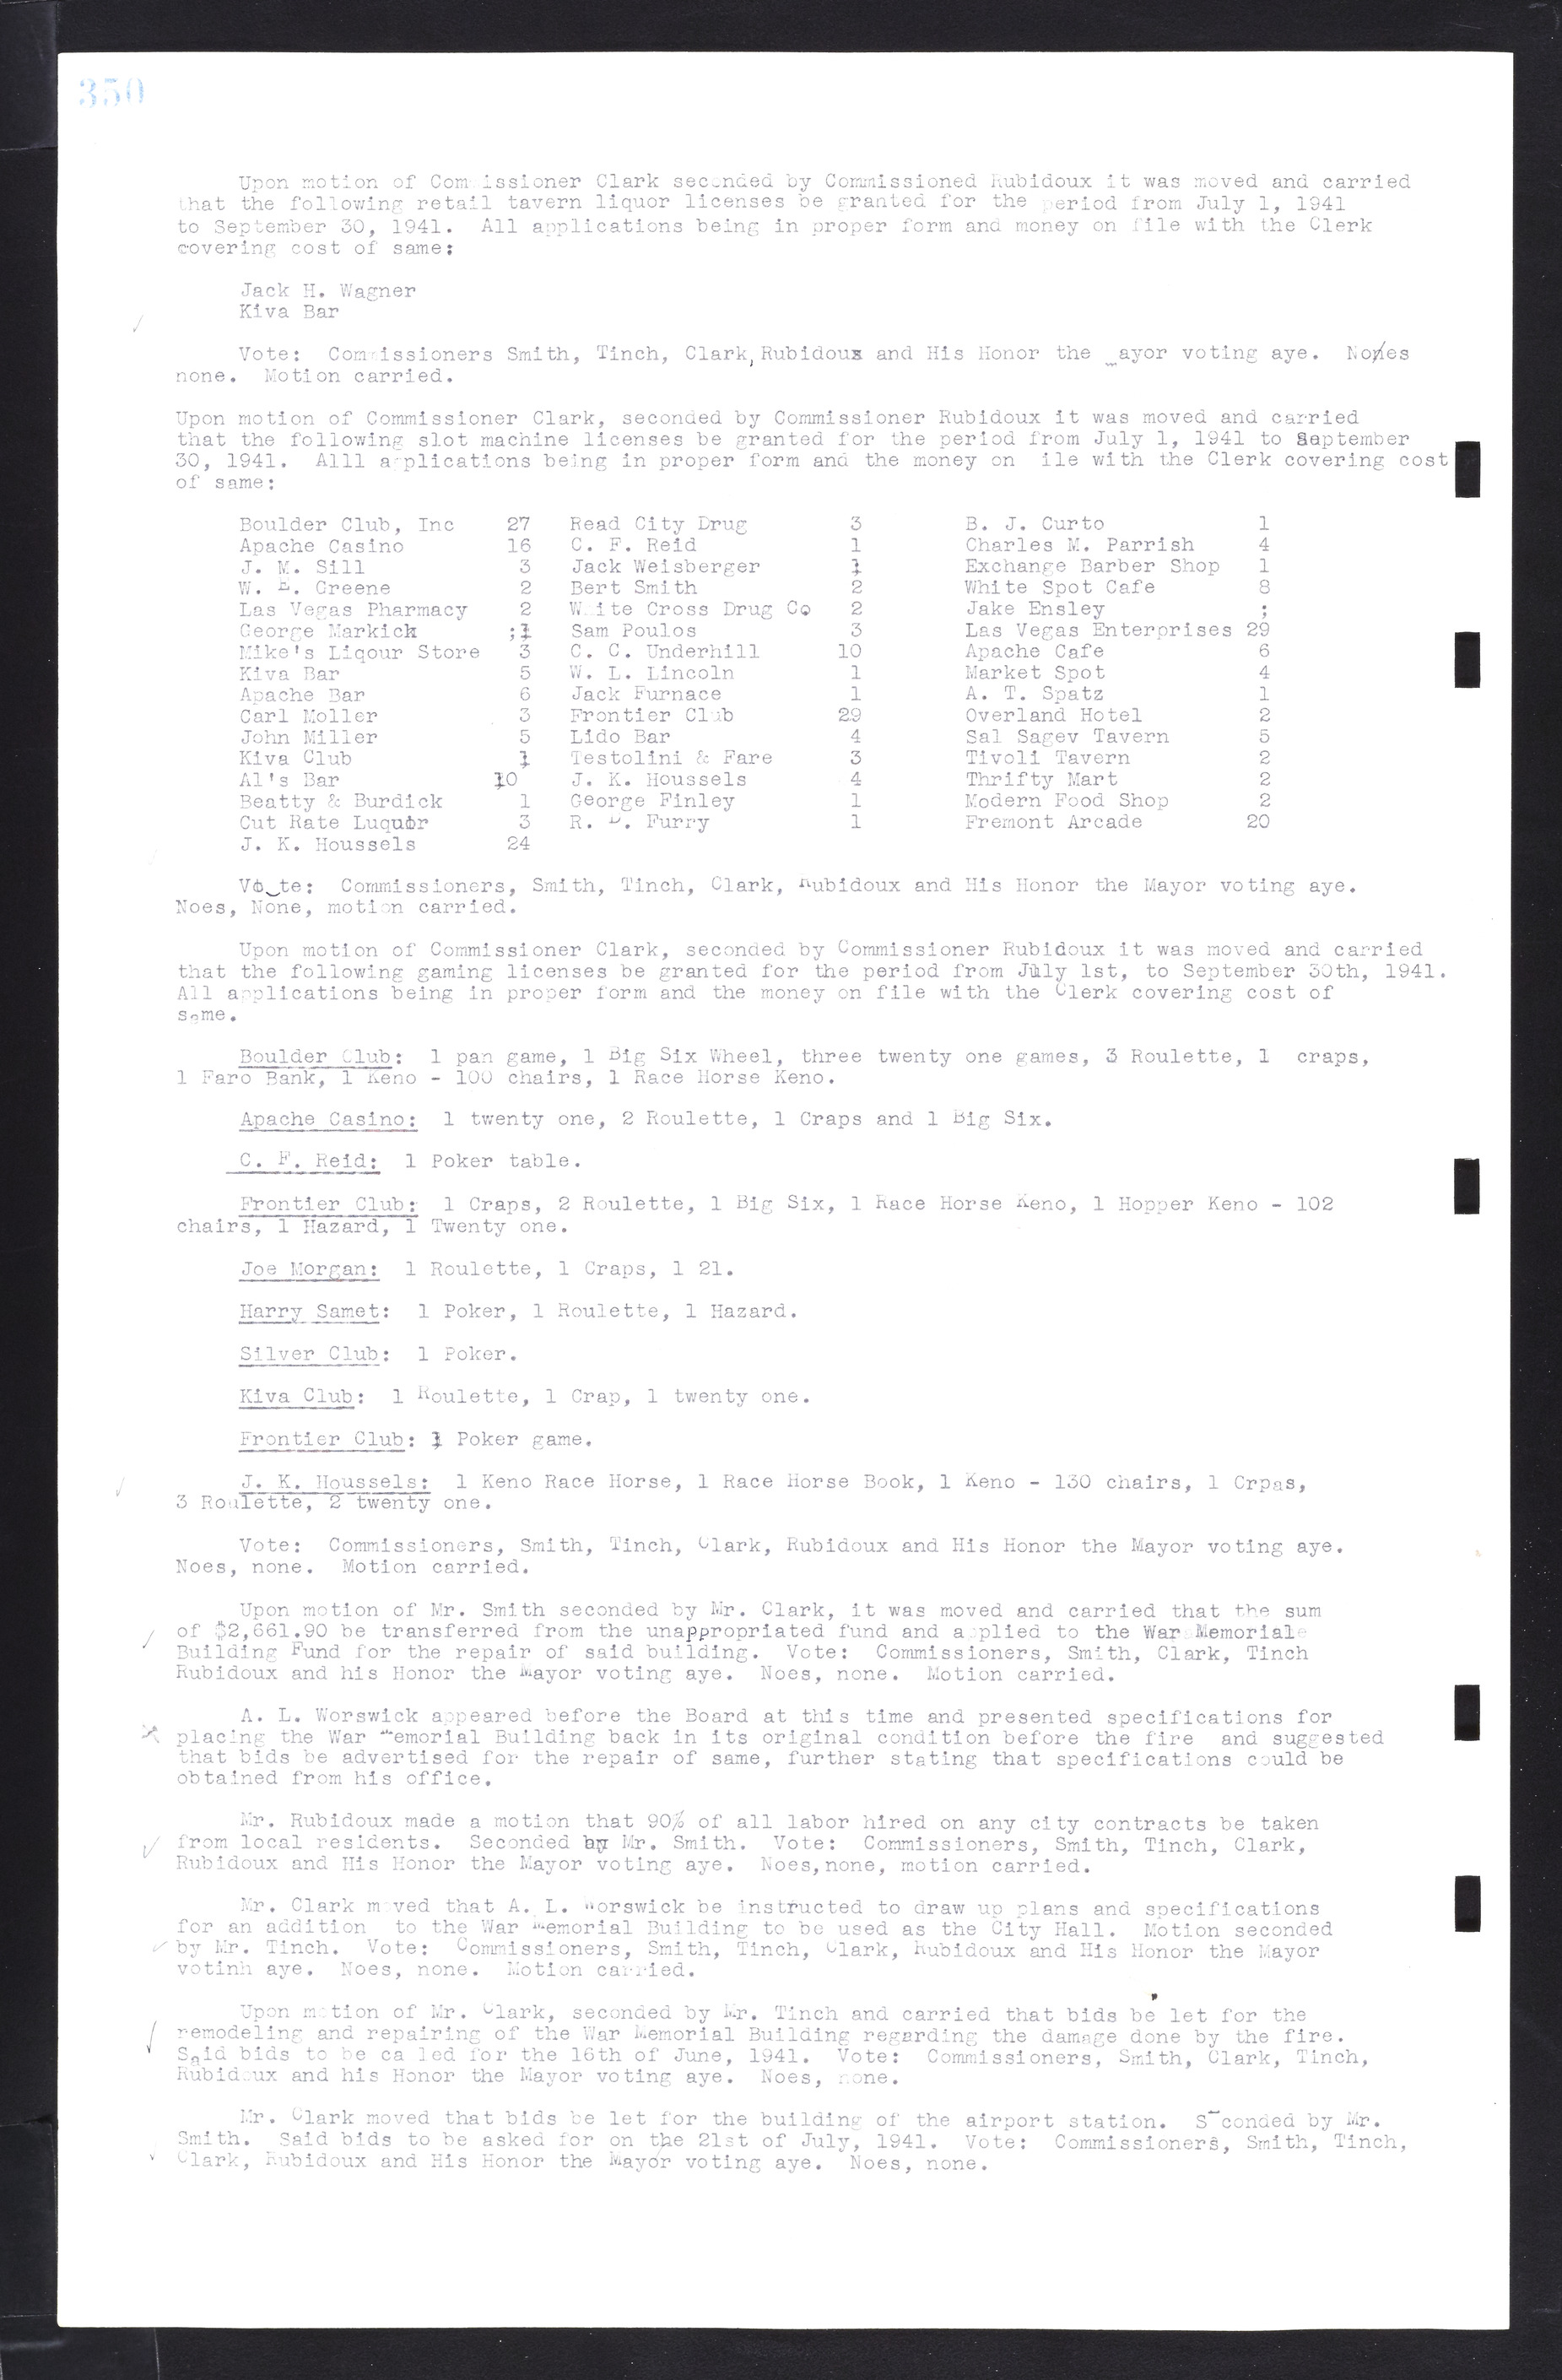 Las Vegas City Commission Minutes, February 17, 1937 to August 4, 1942, lvc000004-376